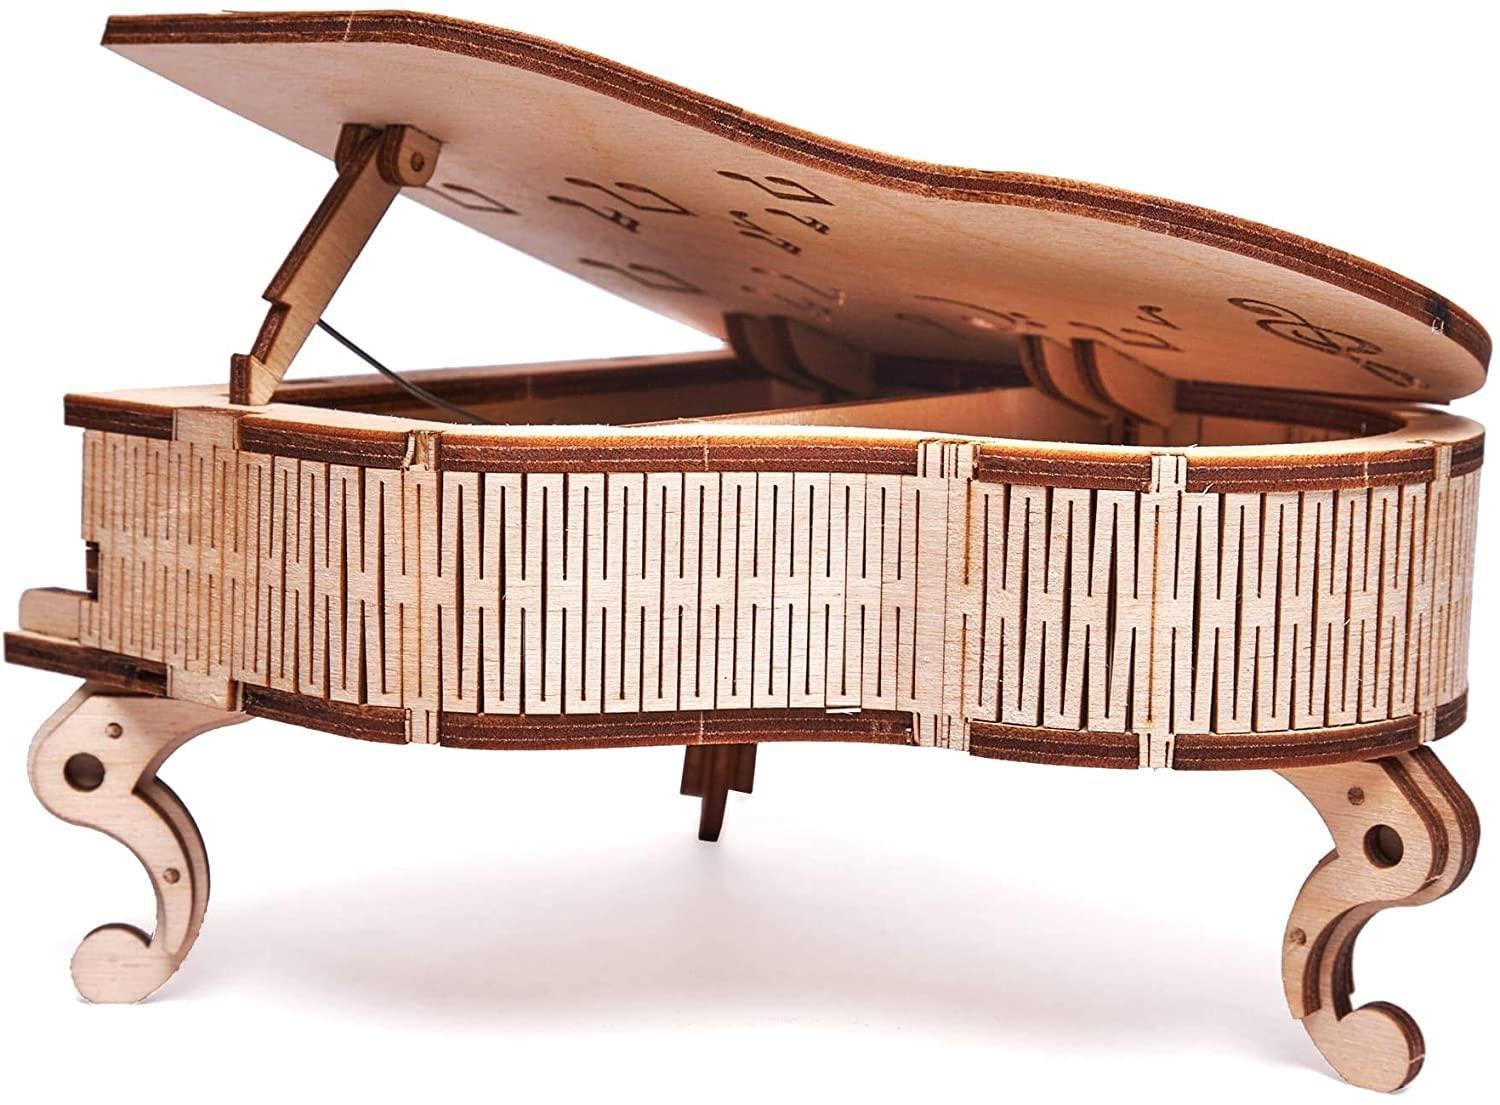 Wood Trick  Piano - 3D Holzbausatz 